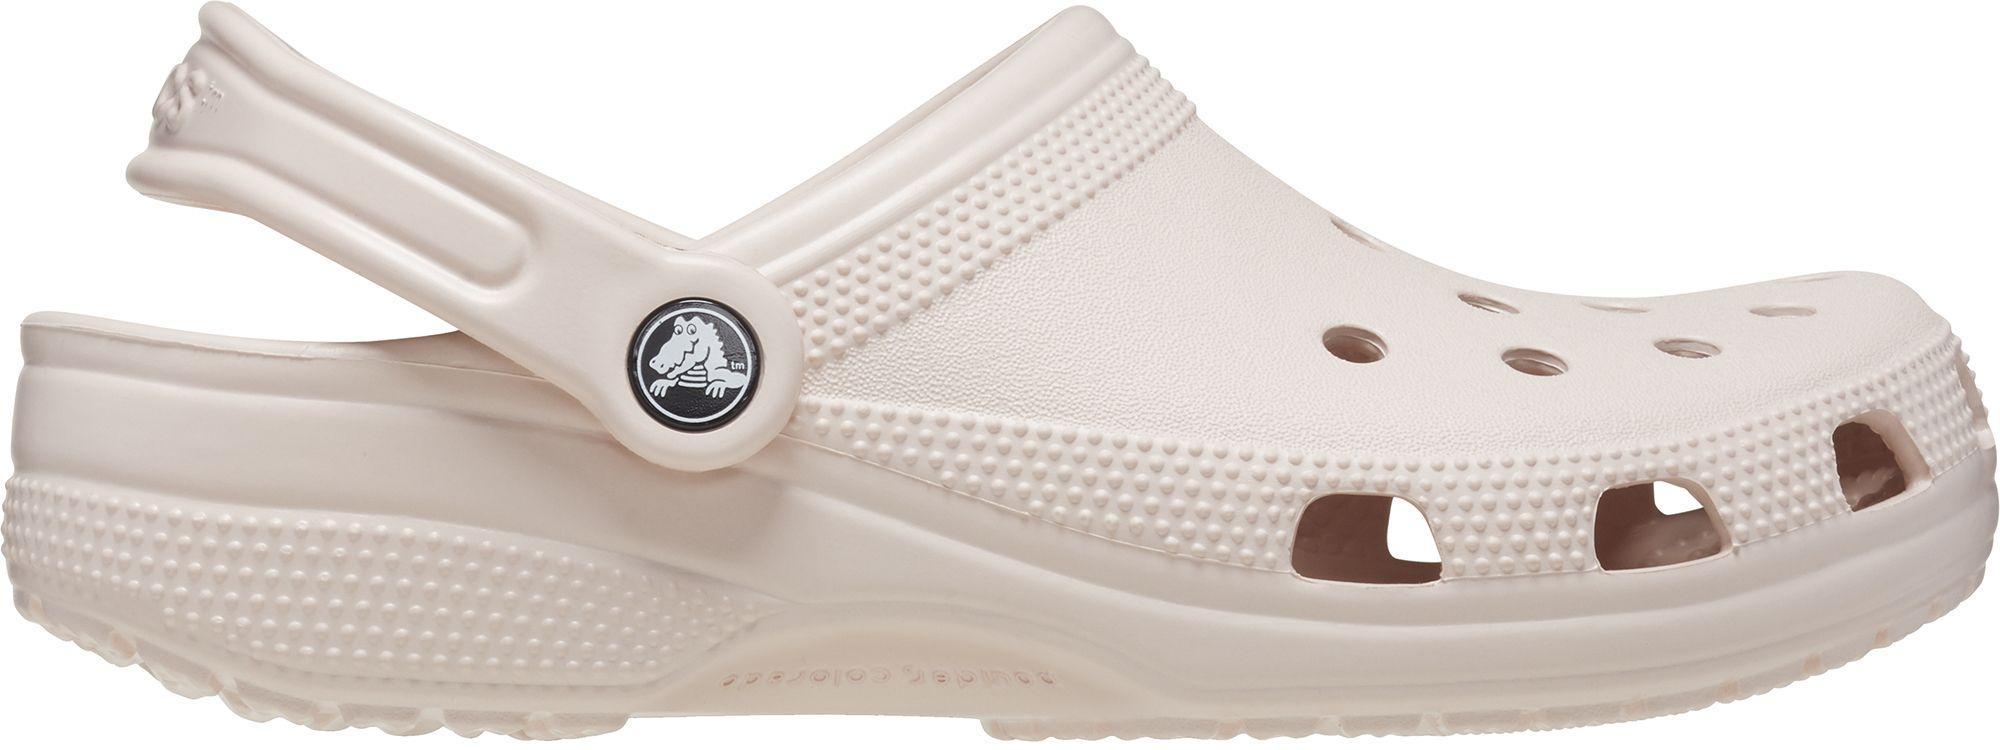 Unisex Crocs Classic Clog Shoes (Mens Sizing) Product Image